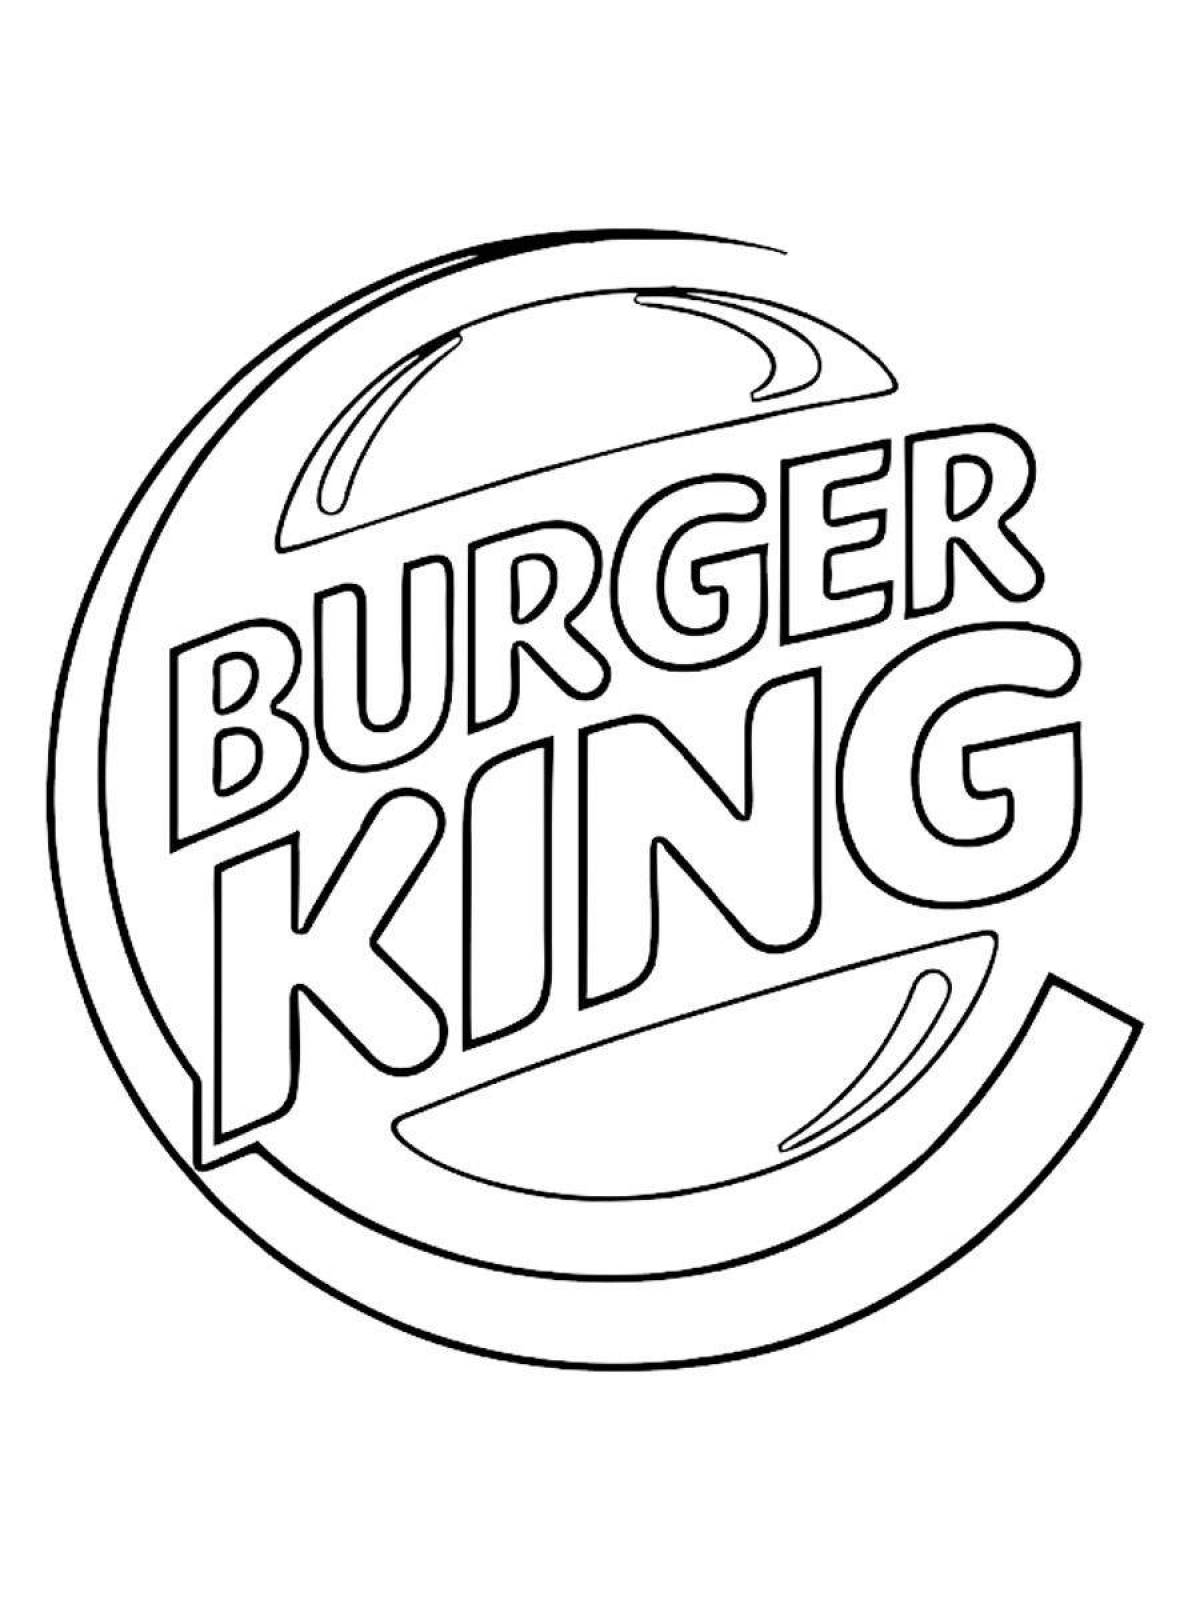 Logo #8